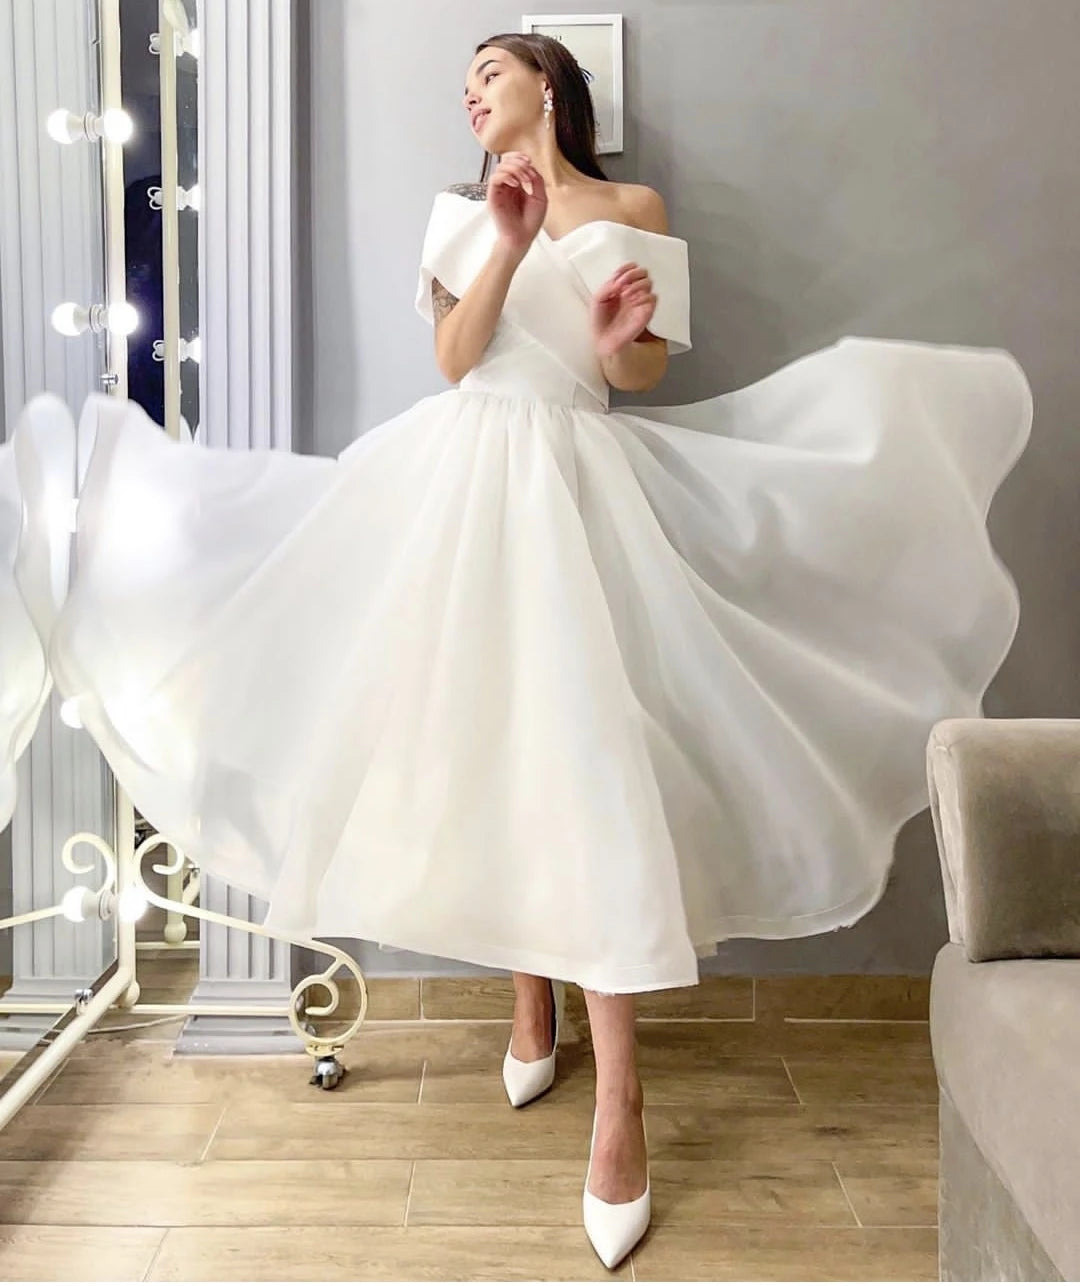 Gaun pengantin pendek dari bahu A-line satin gaun pengantin panjang pergelangan kaki pendek disesuaikan untuk mengukur sederhana